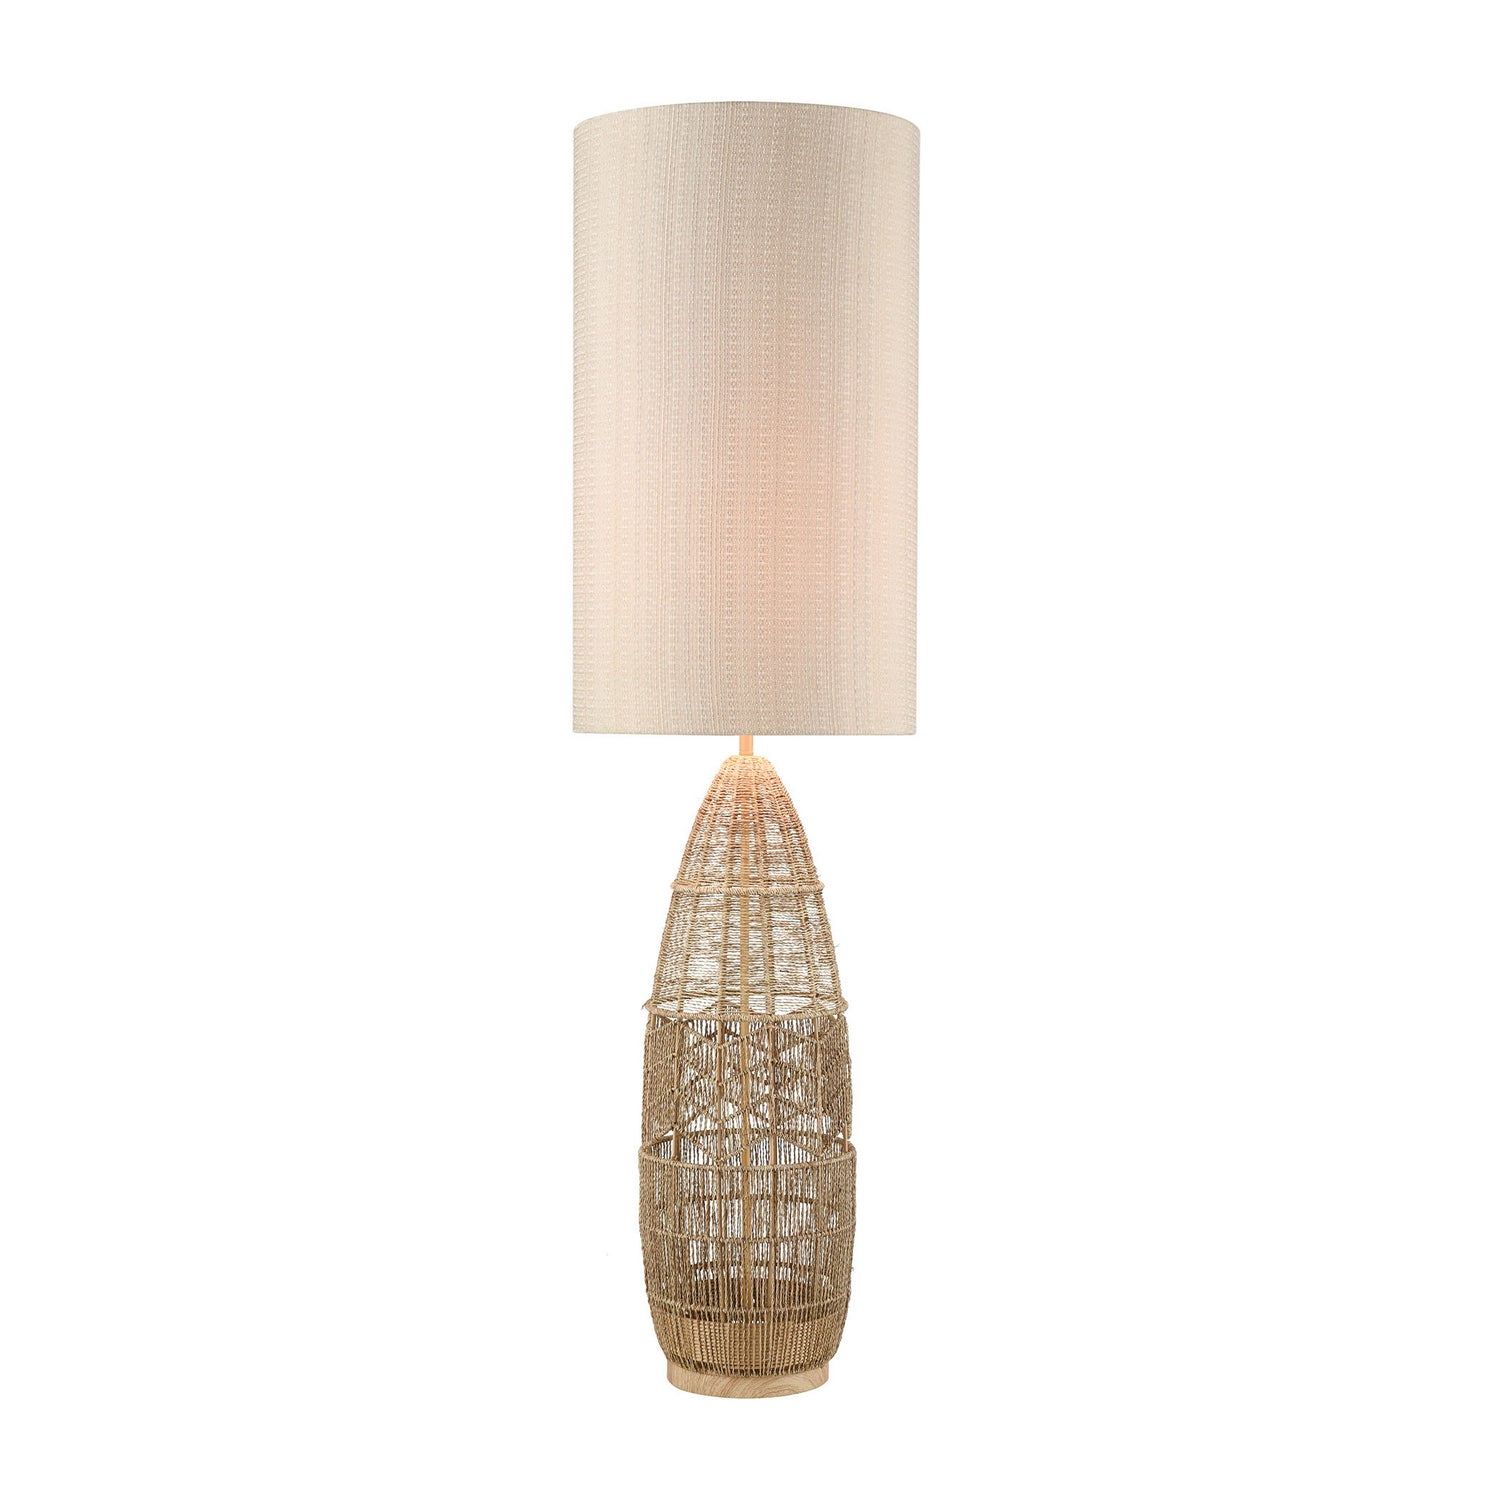 ELK Home - D4554 - One Light Floor Lamp - Husk - Natural